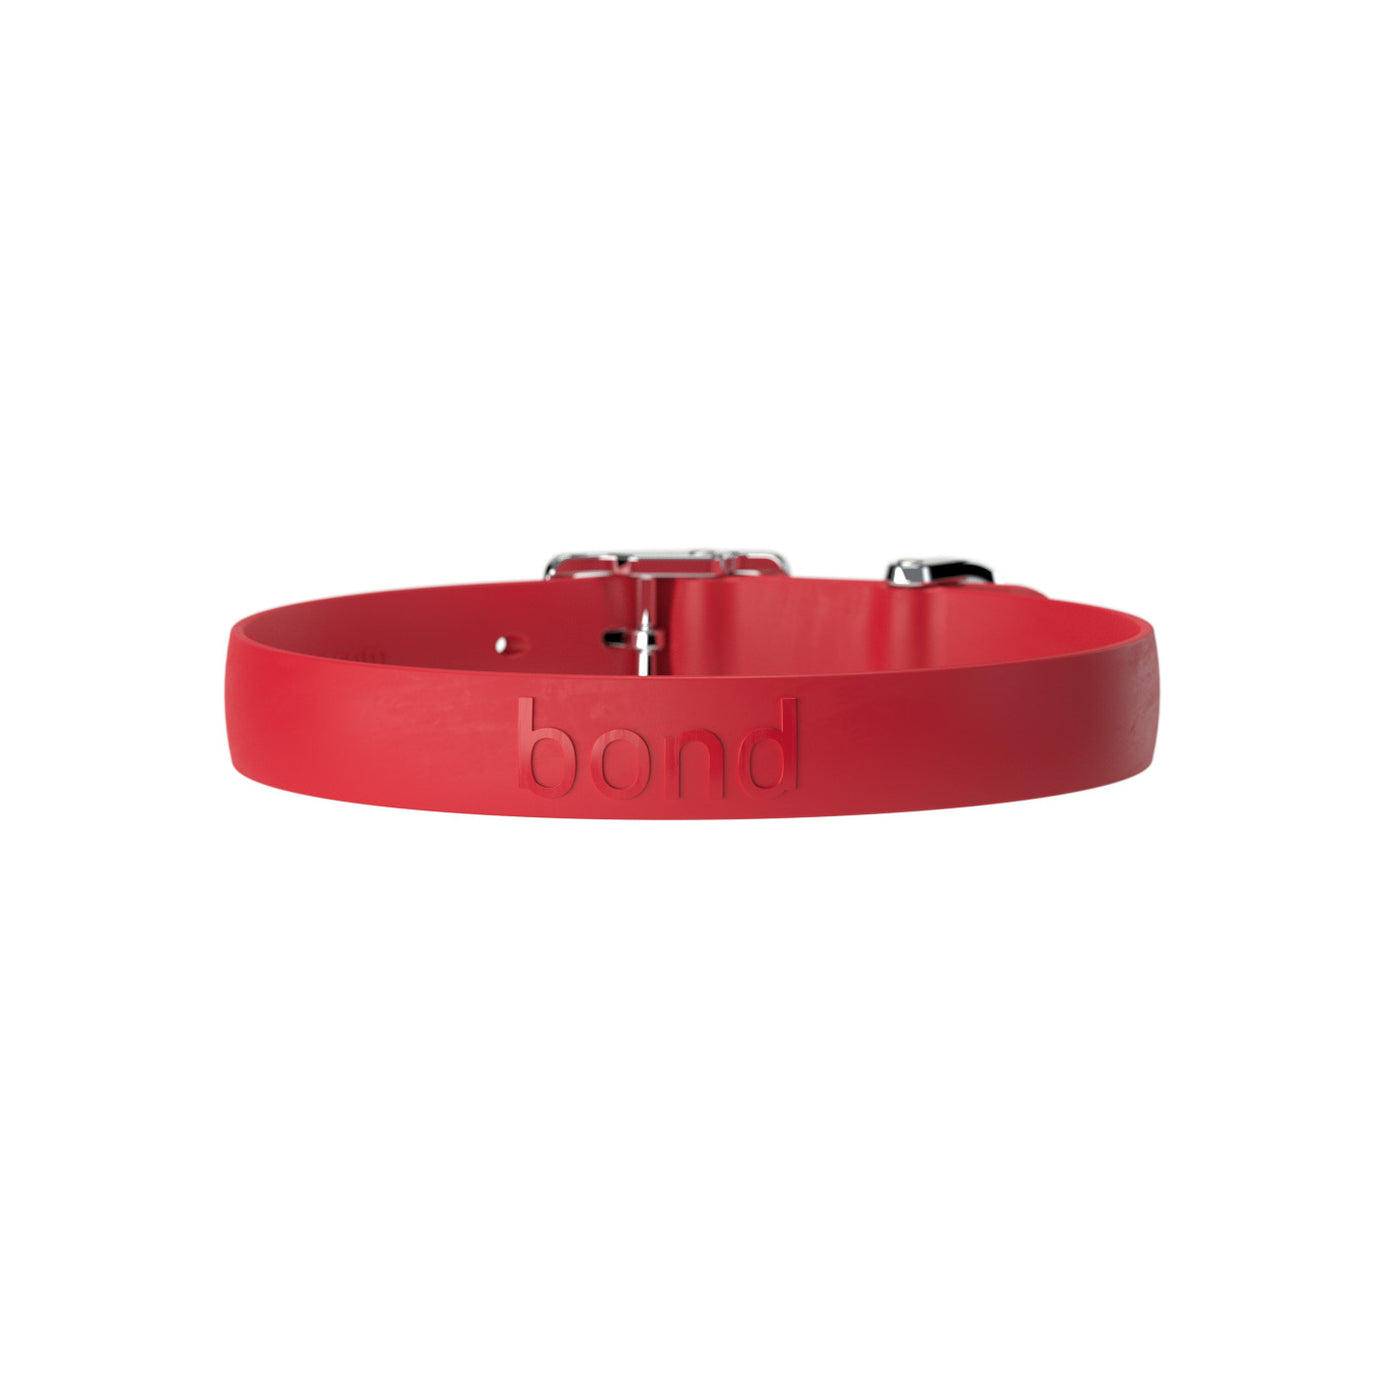 Waterproof Red dog collar